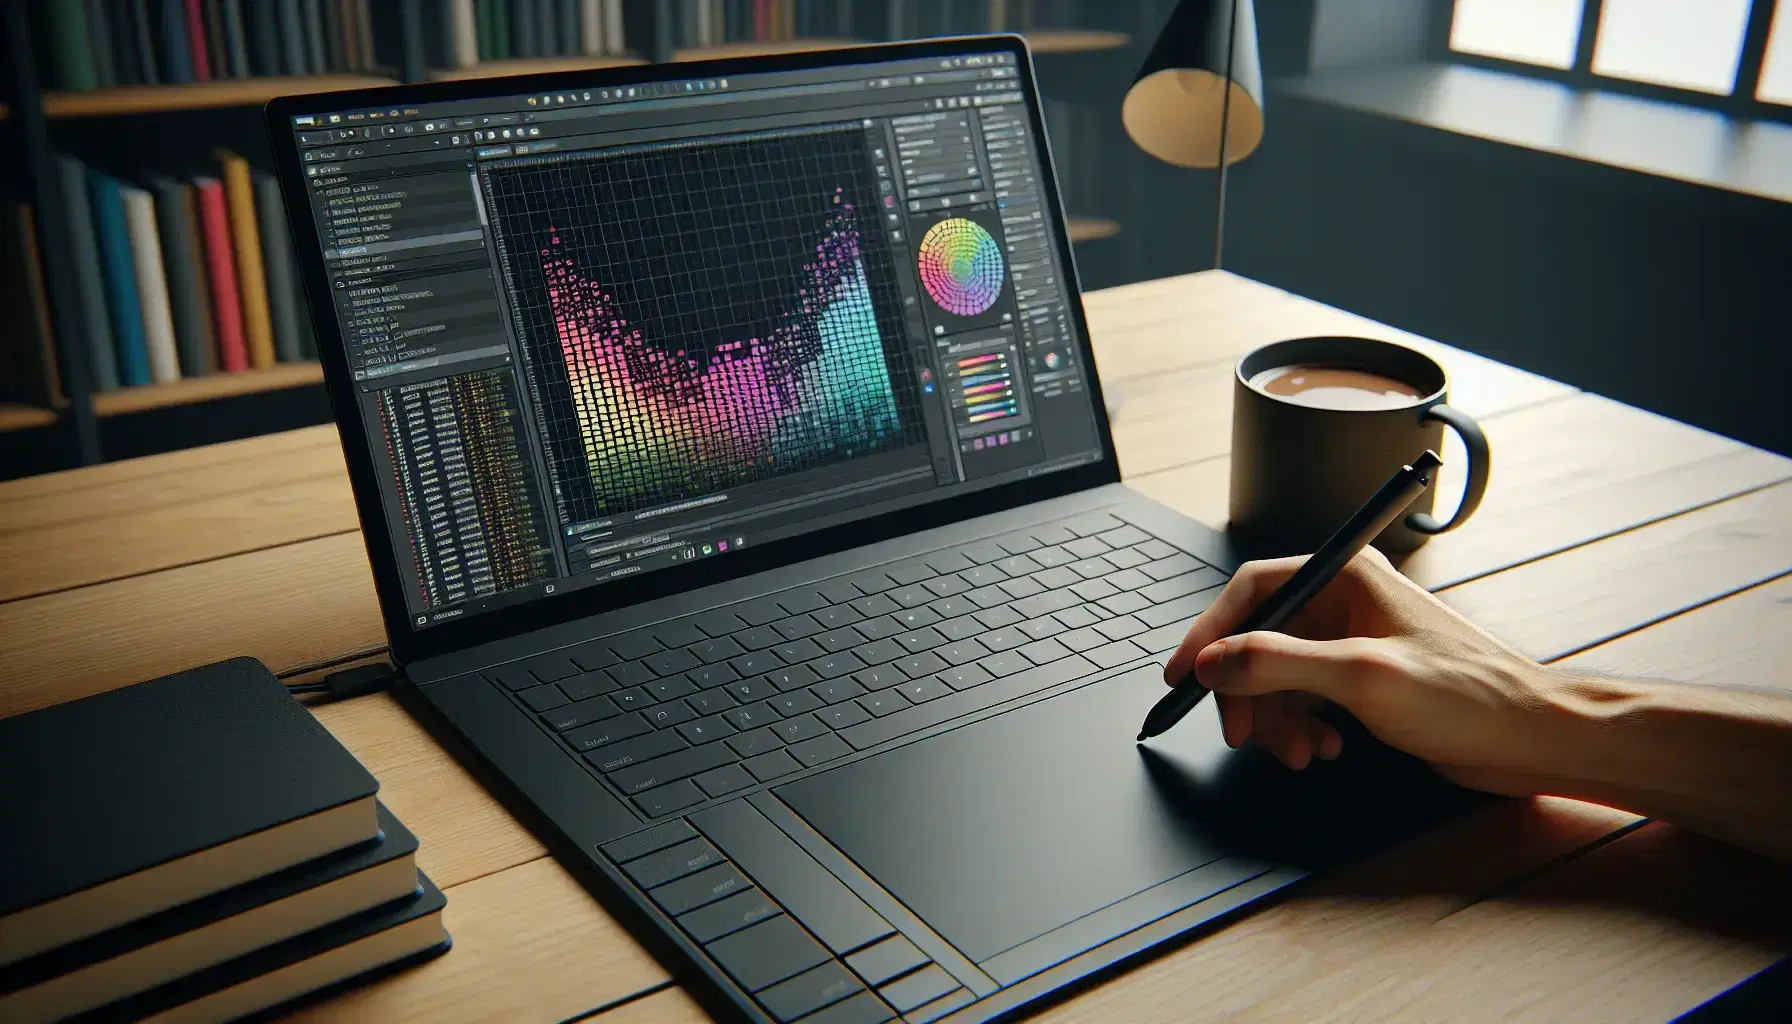 Mano sosteniendo un lápiz óptico sobre tableta gráfica conectada a portátil con bloques de color en pantalla, junto a taza de café en mesa de madera.